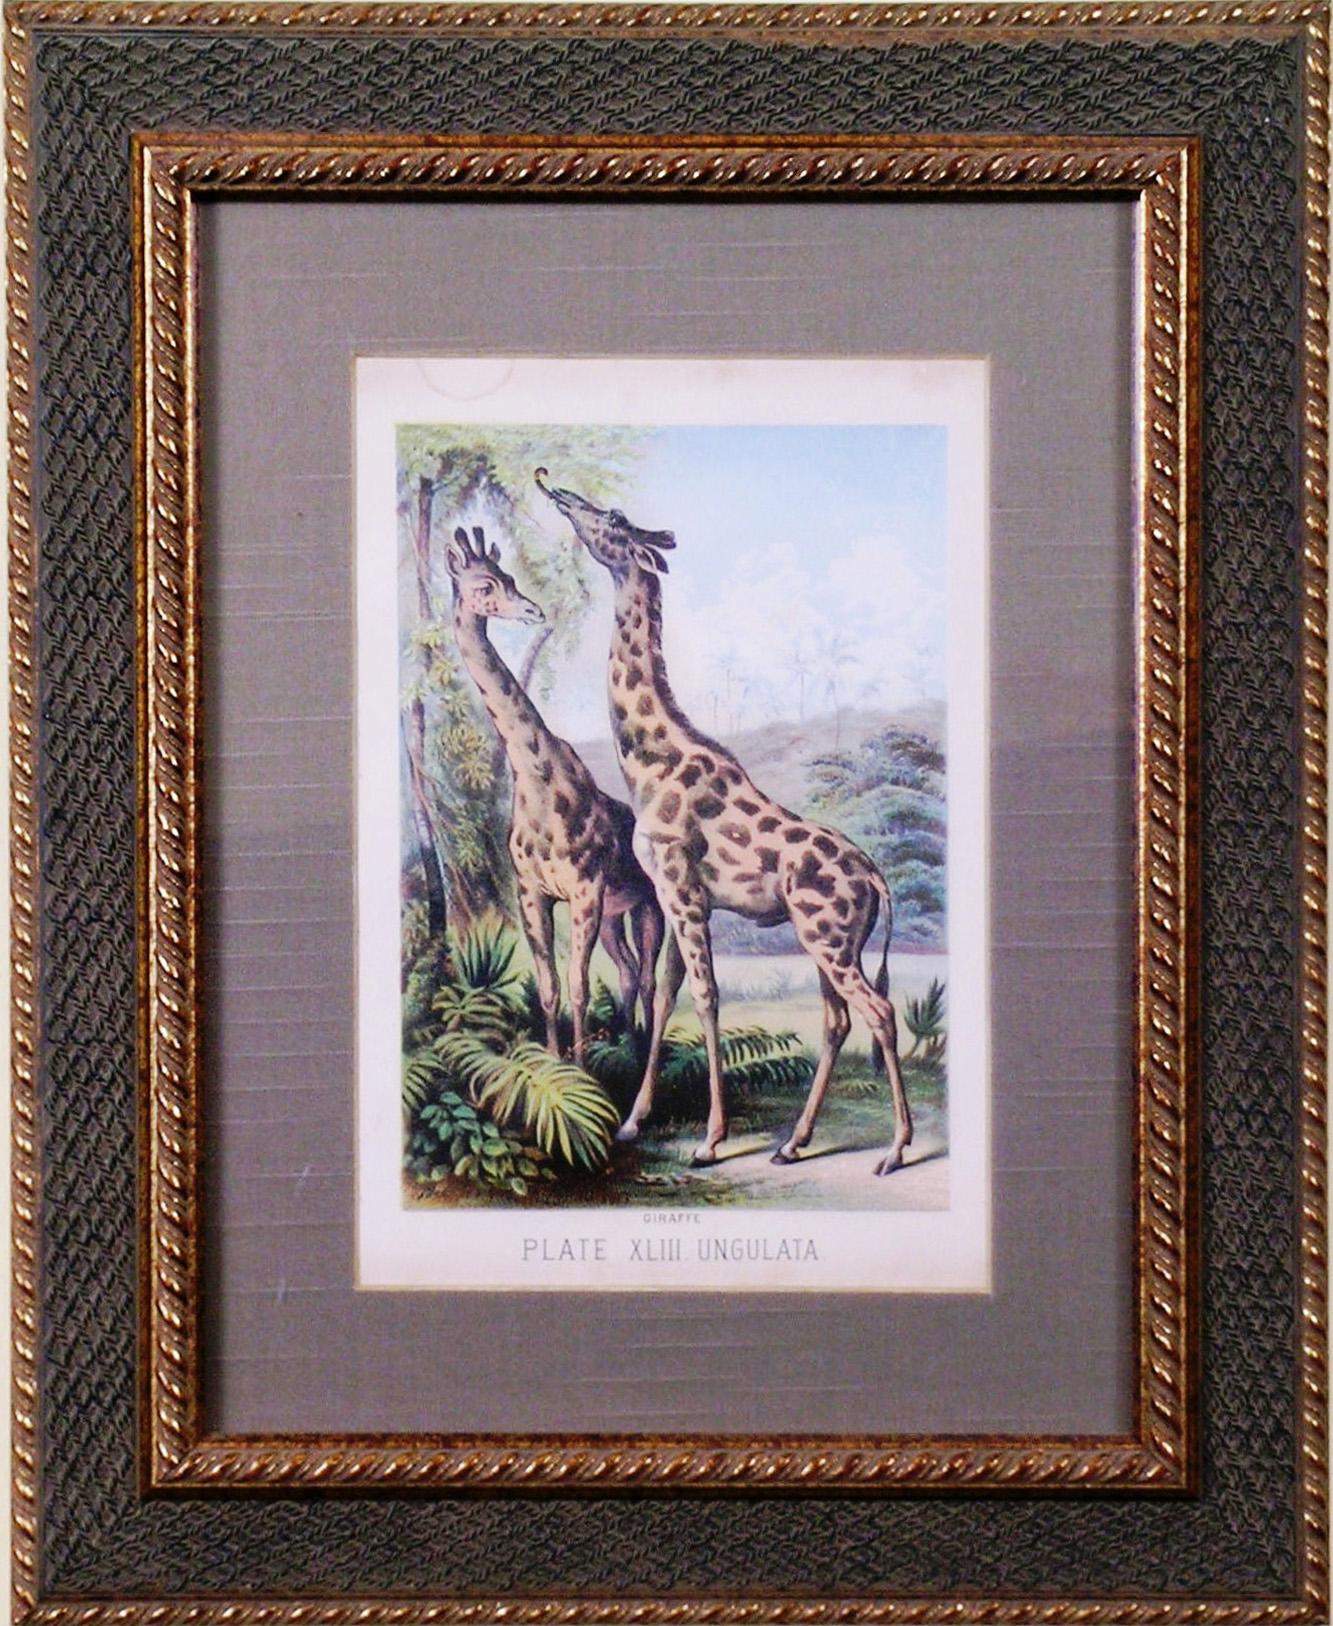 Plate XLIII Ungulata (Giraffes) - Print by Henry J. Johnson